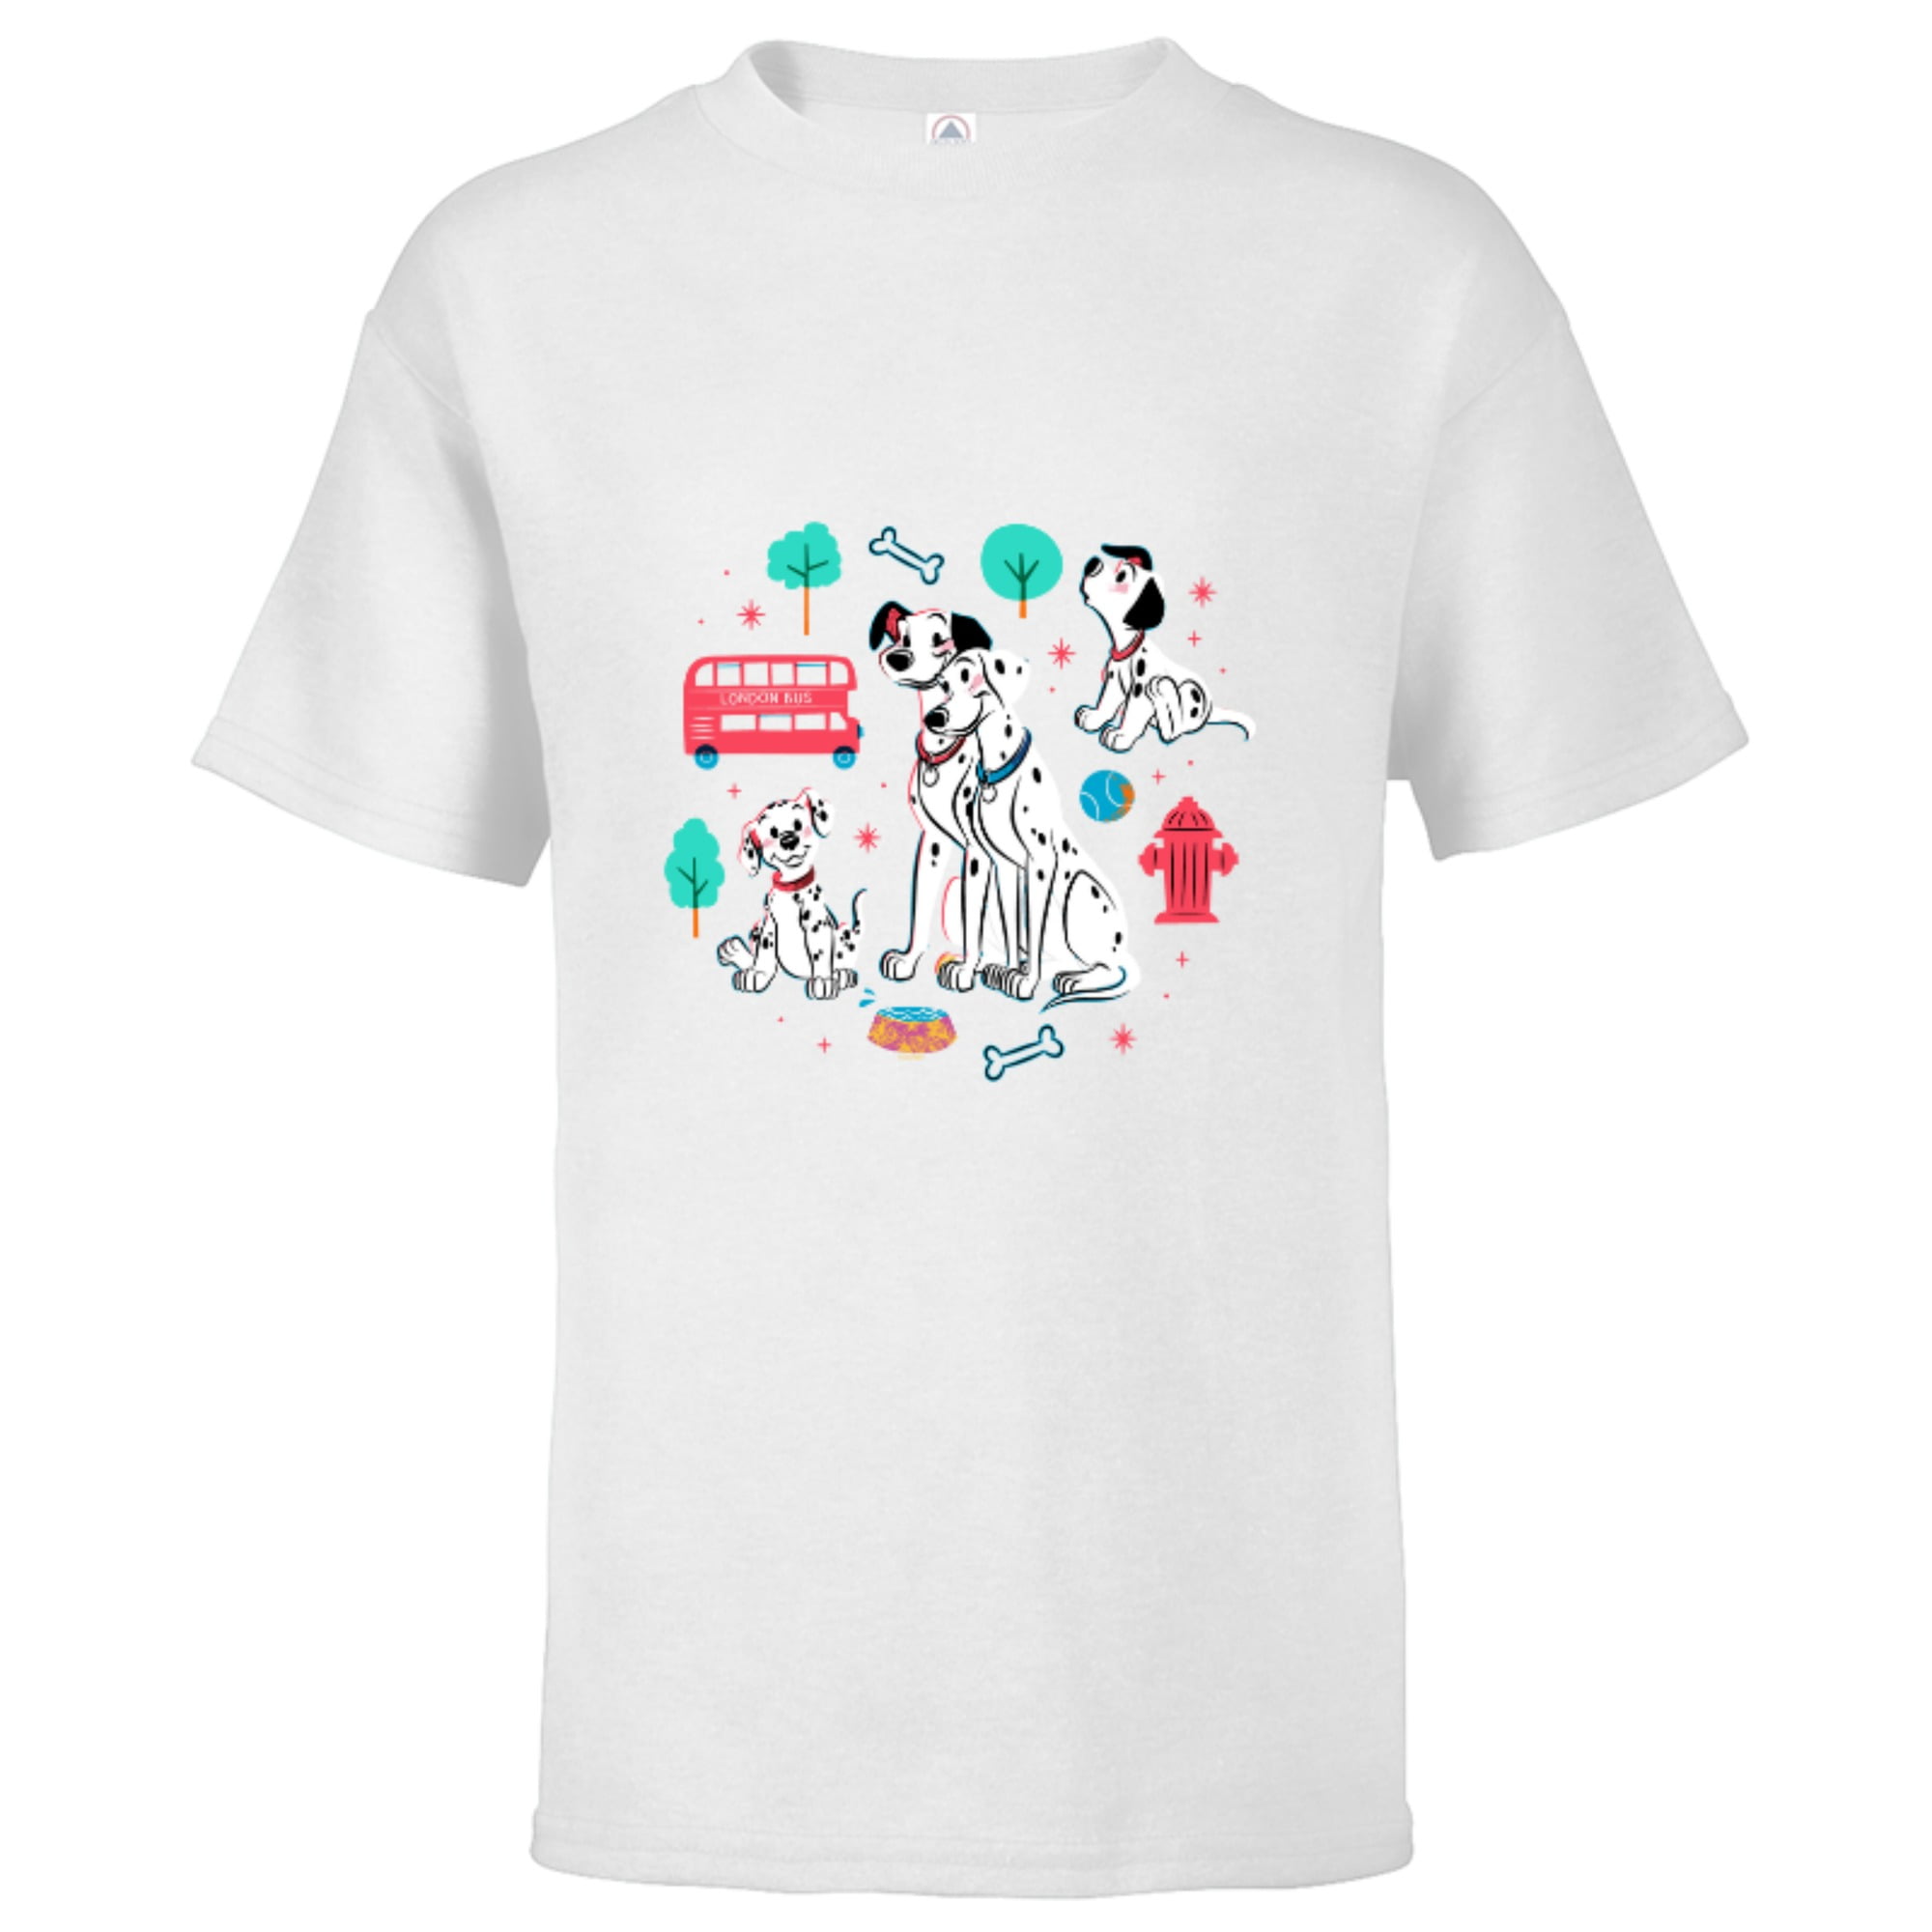 101 Dalmatians Shirt, Dalmatians Dog Shirt, Disney Shirt, Walt Disney World Shirt, Dalmatians Shirt, Disney Tshirt White XL Sweatshirt | Roman T Shir